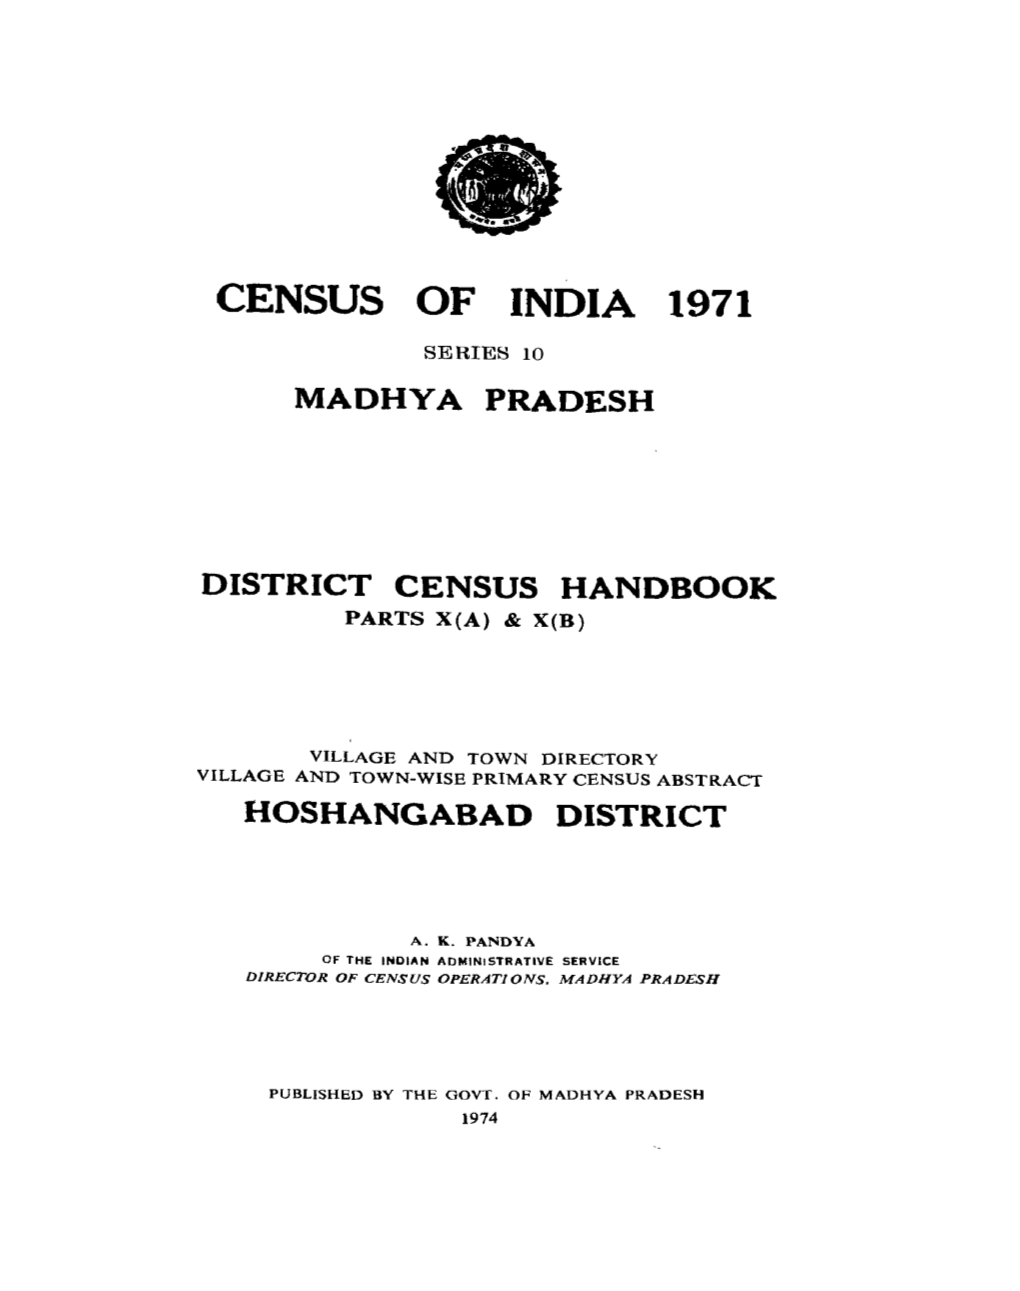 District Census Handbook, Hoshangabad, Part X(A) & X(B)